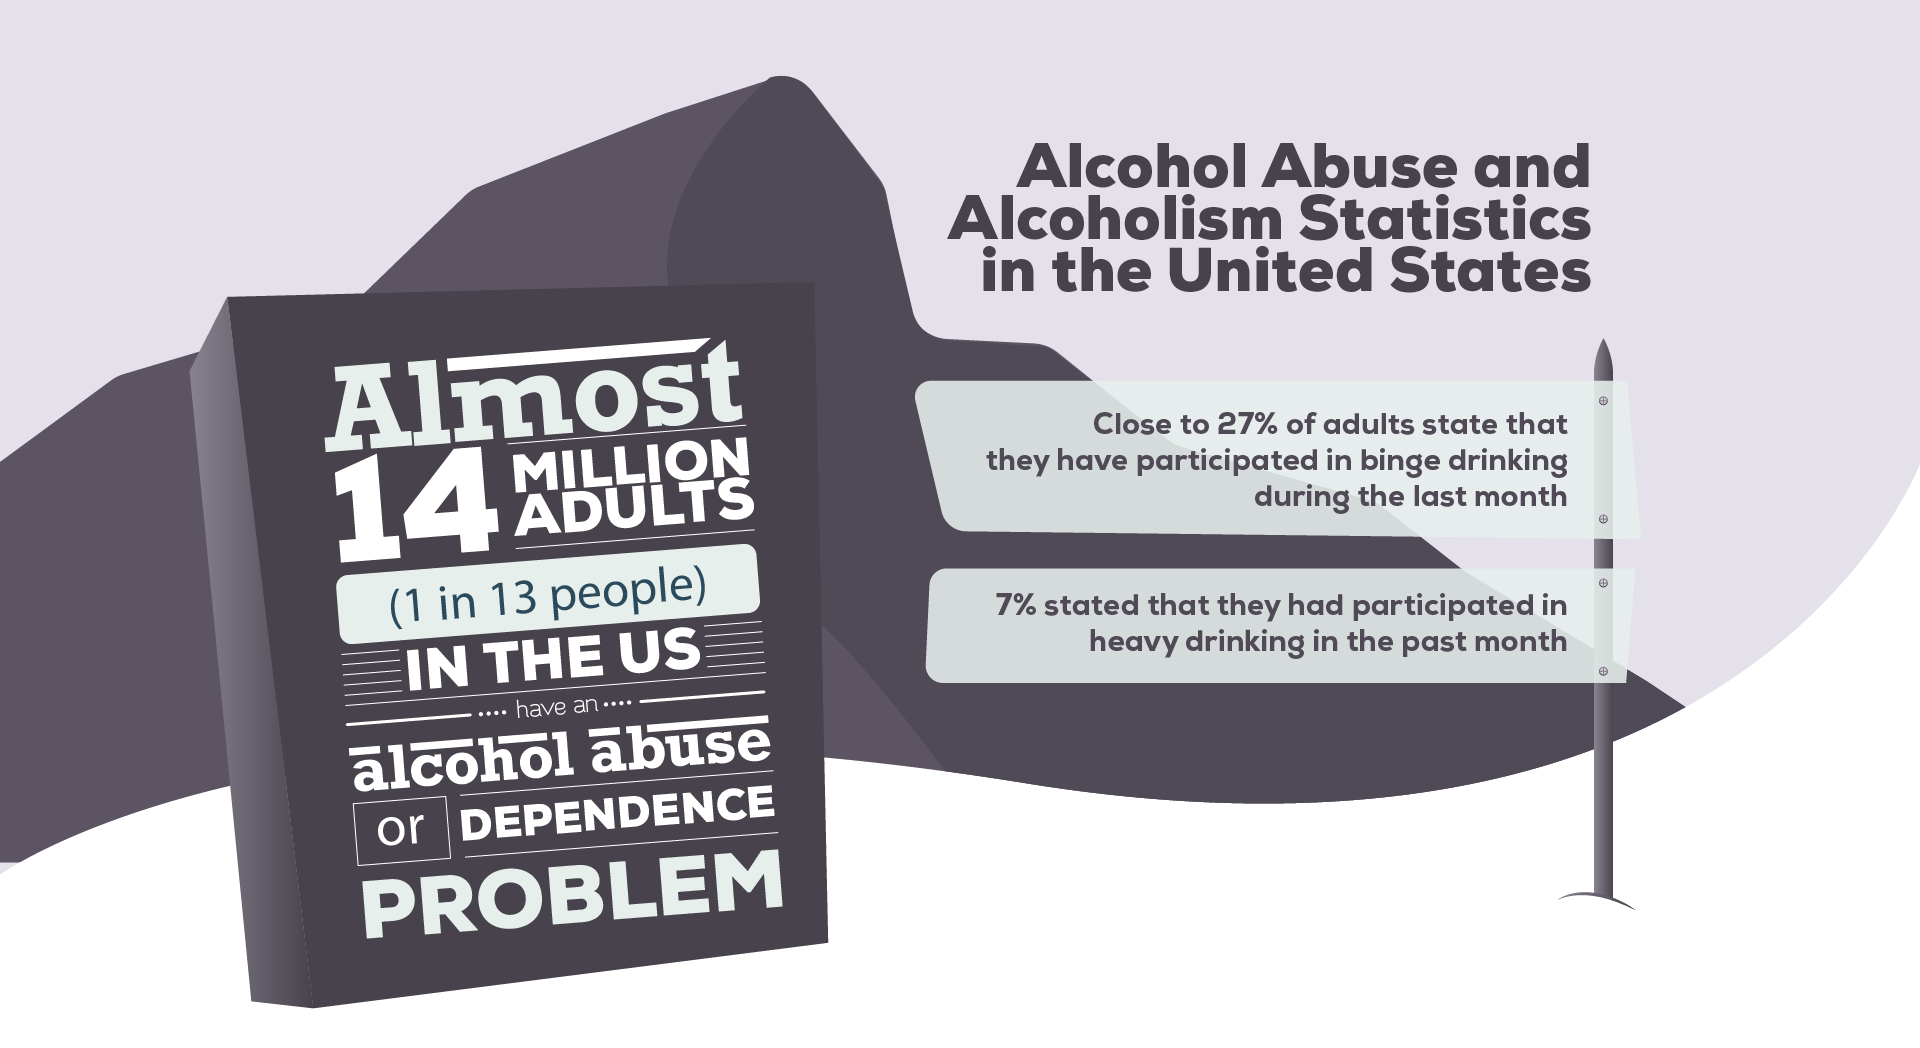 Alcoholism Statistics In The U.S.